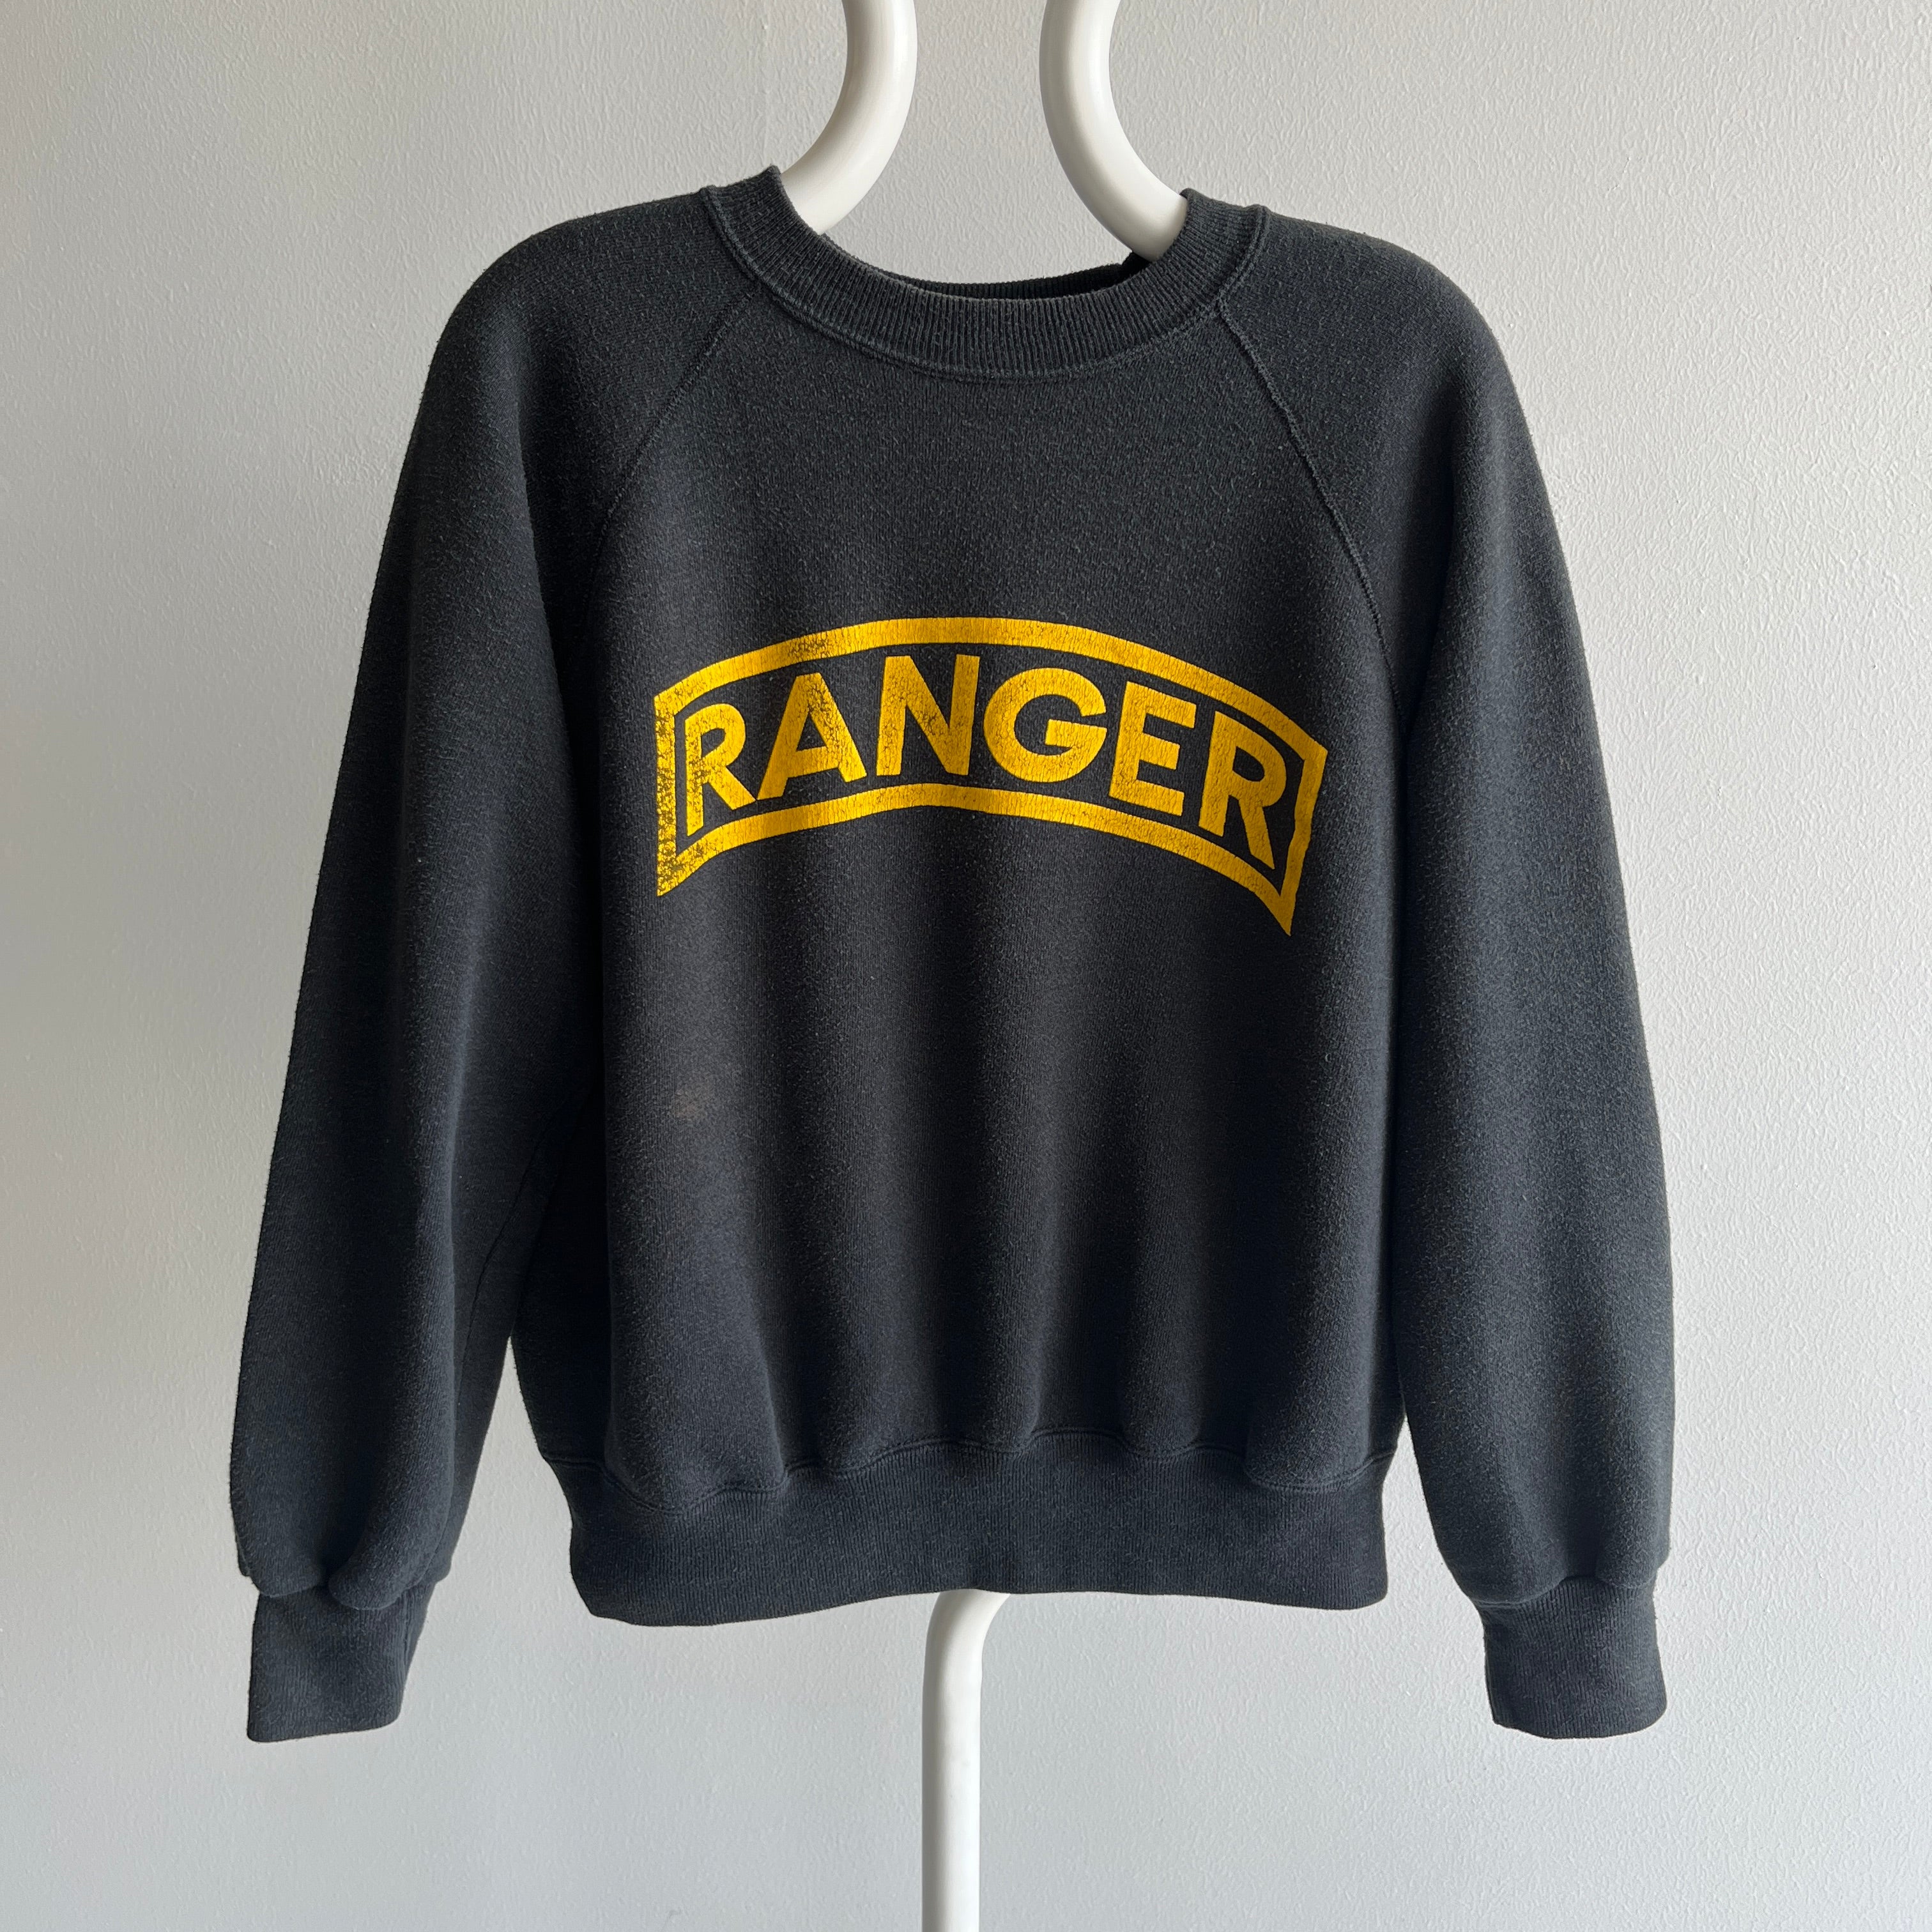 1980s Ranger Sweatshirt with EPIC Sun Fading on the Backside